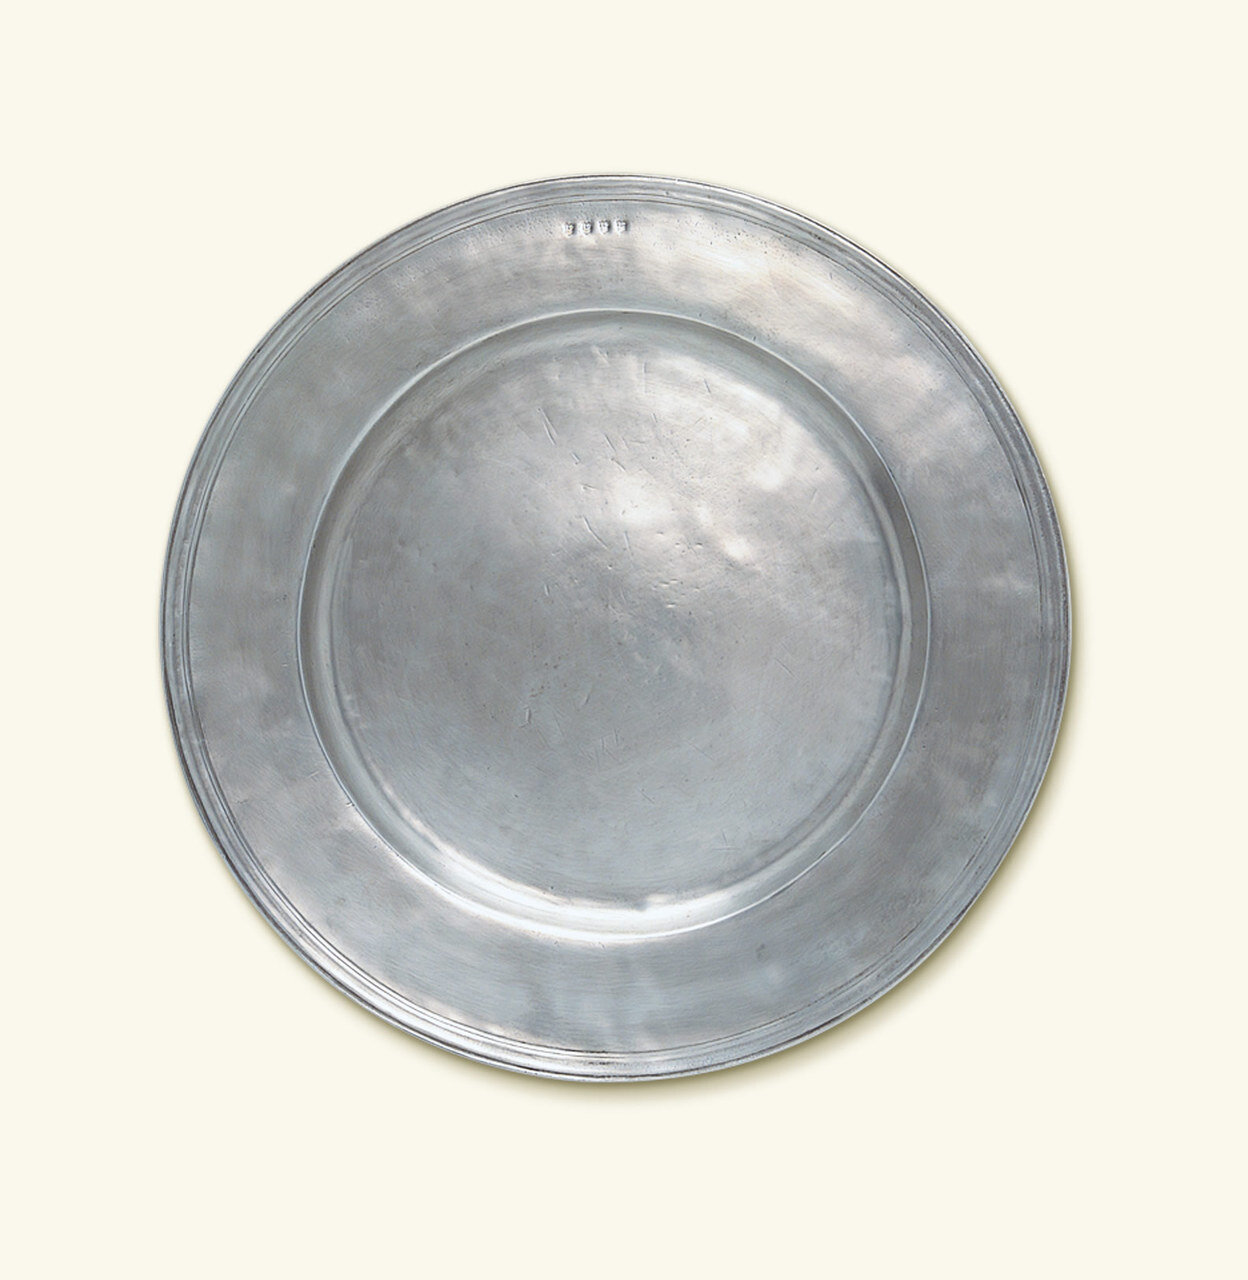 Match Pewter Round Platter Medium a637.0